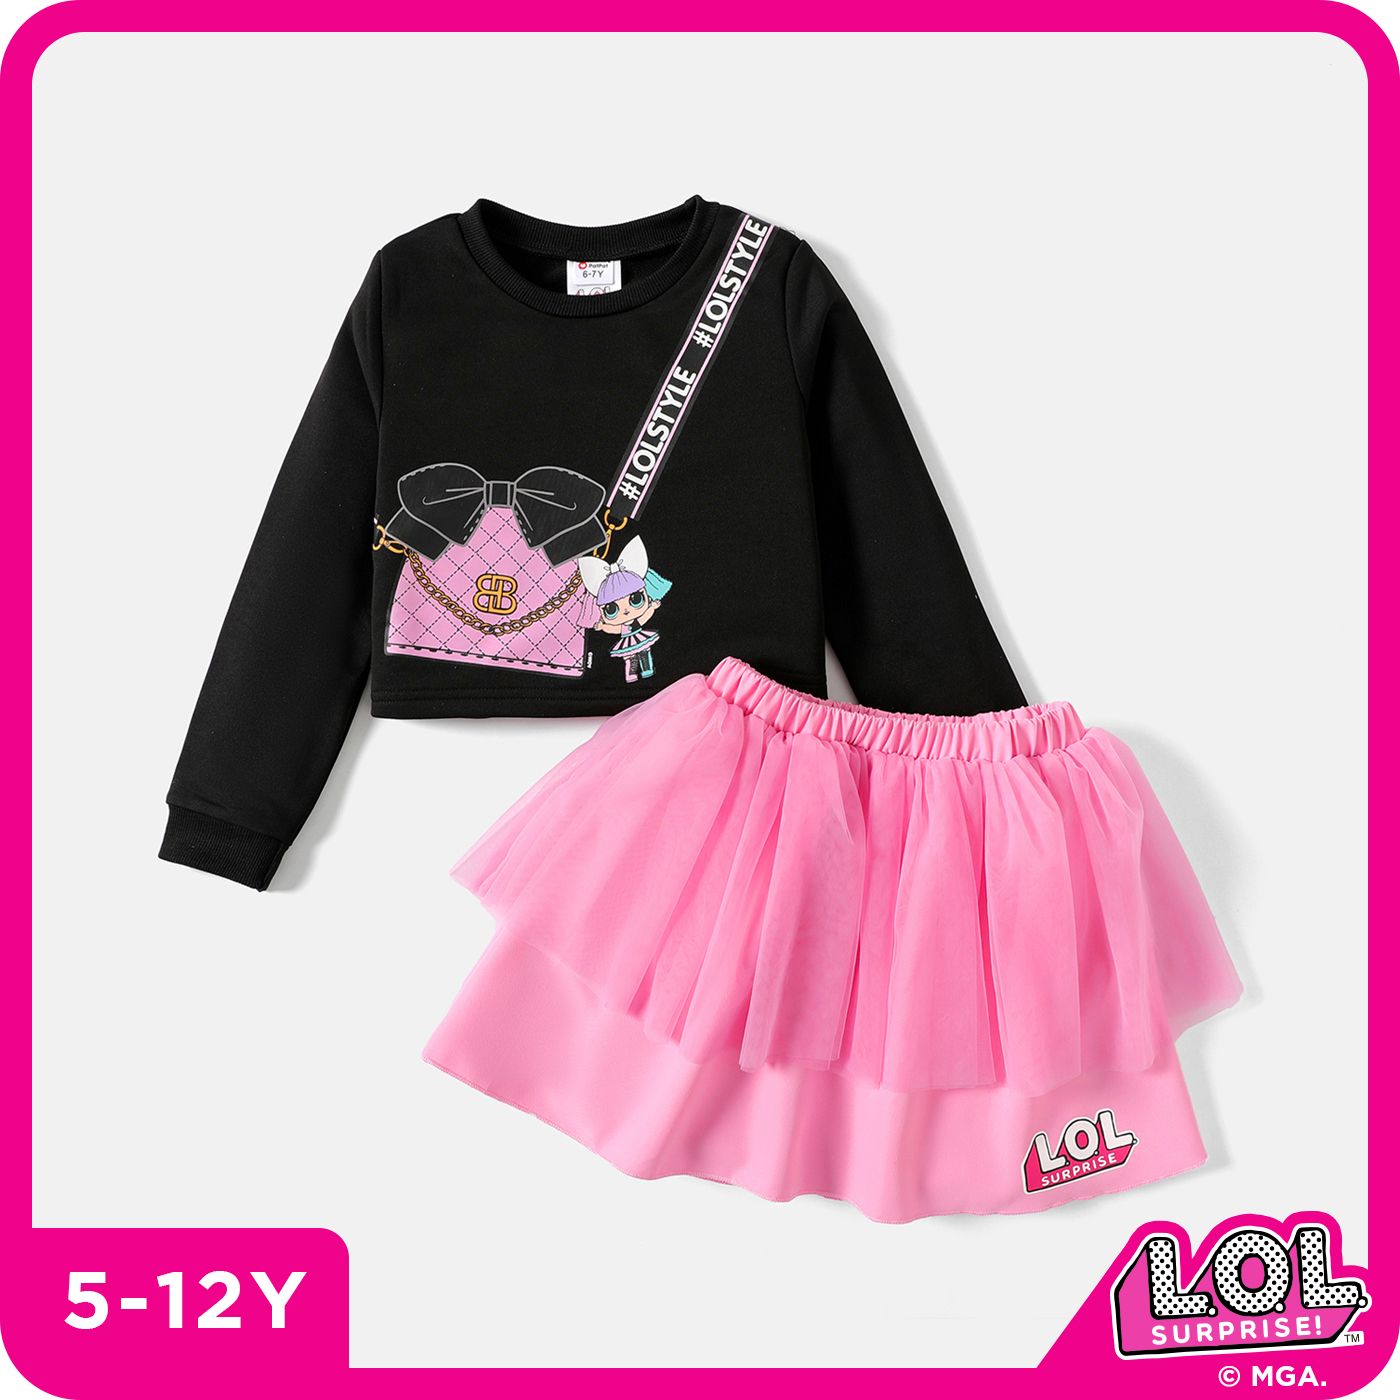 L.O.L. SURPRISE! 2pcs Kid Girl Bag Print Black Sweatshirt and Mesh Skirt Set